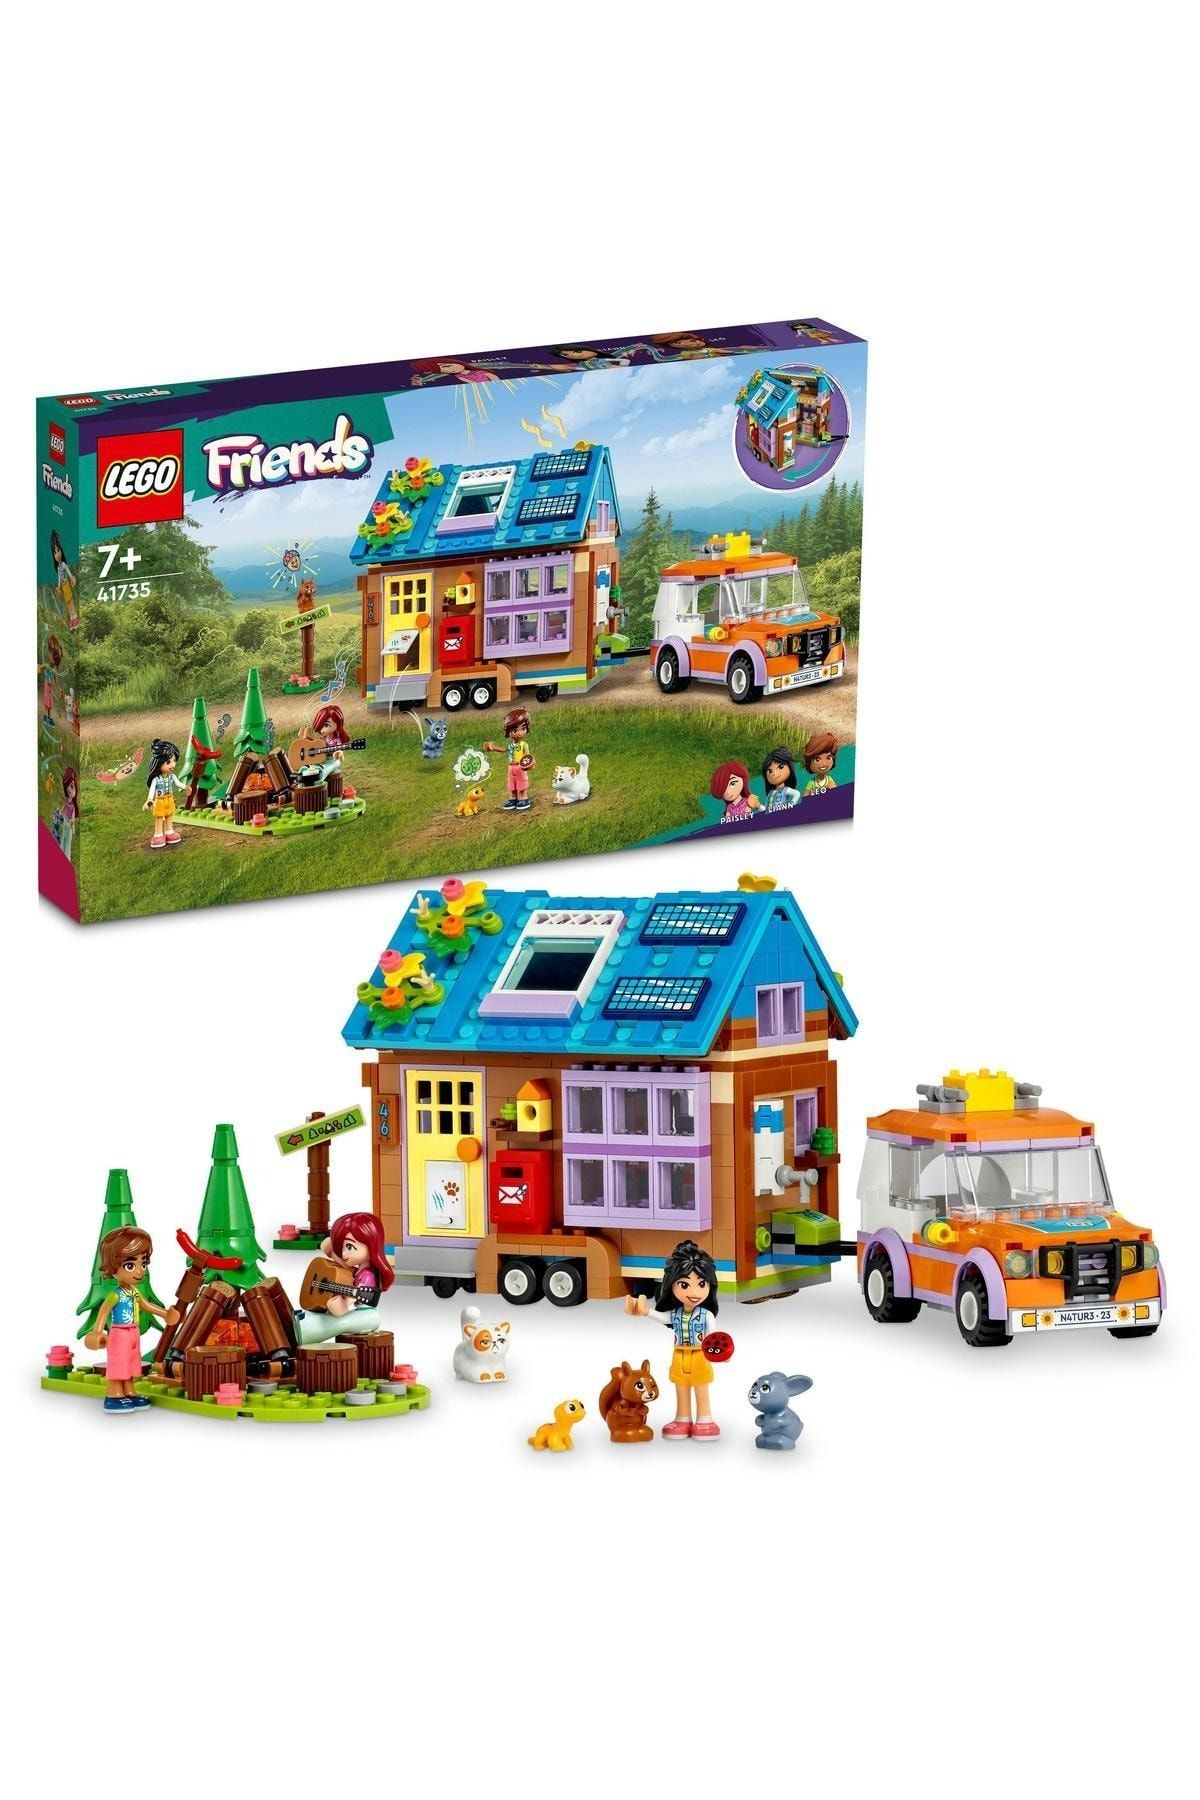 LEGO Friends 41735 Mobil Küçük Ev (785 Parça)